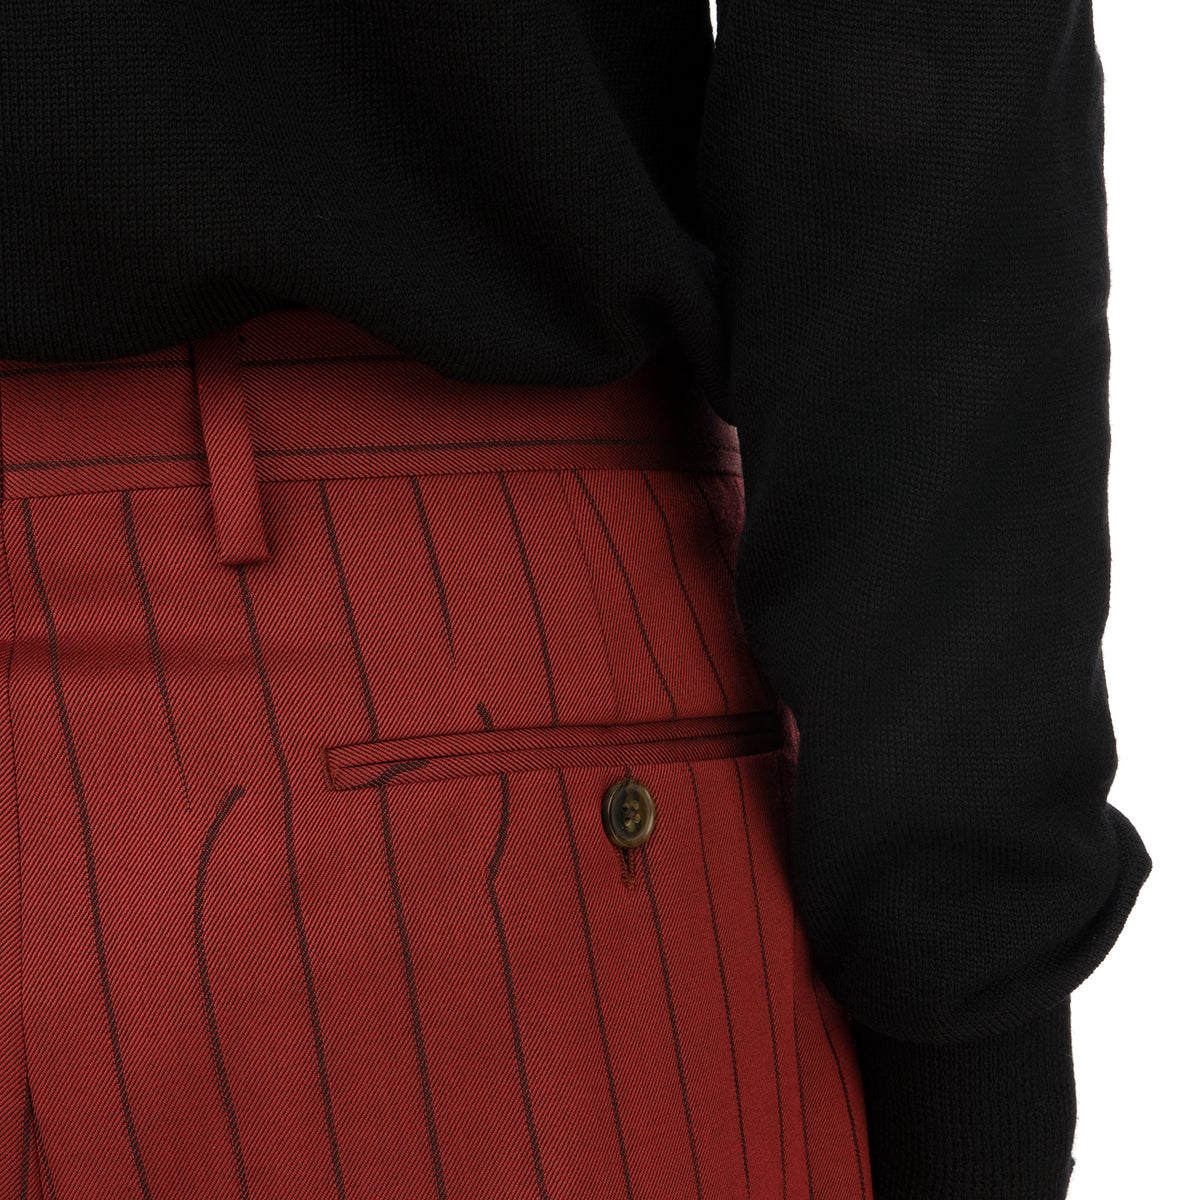 Vivienne Westwood | Cropped George Trousers Red - Broken Pinstripe - Concrete